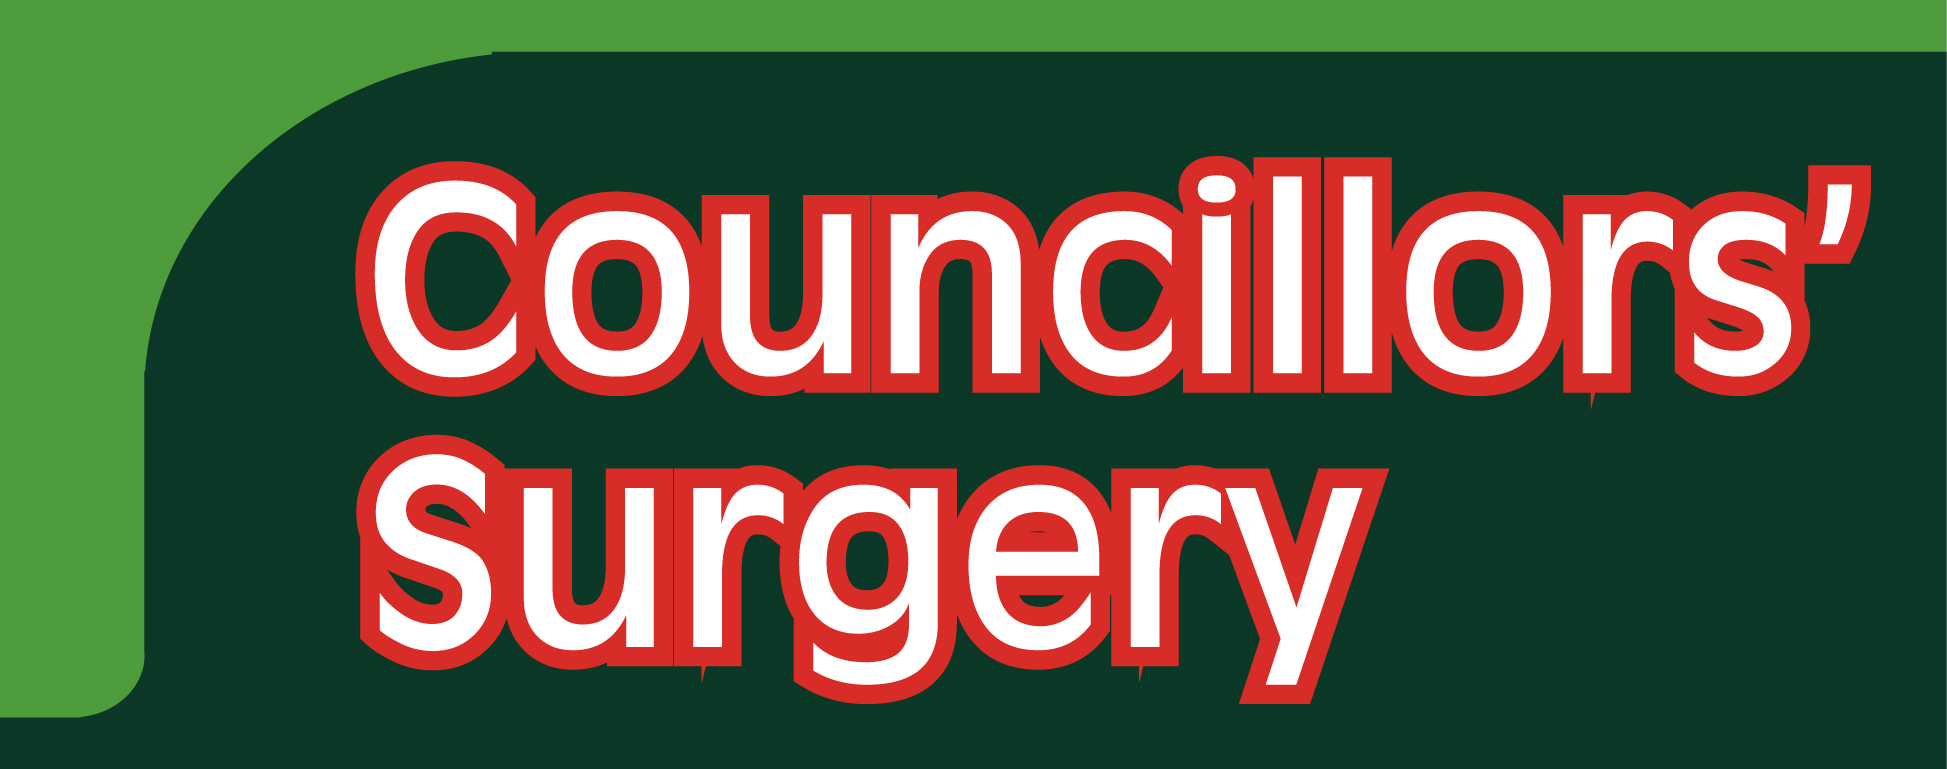 Councillors Surgery